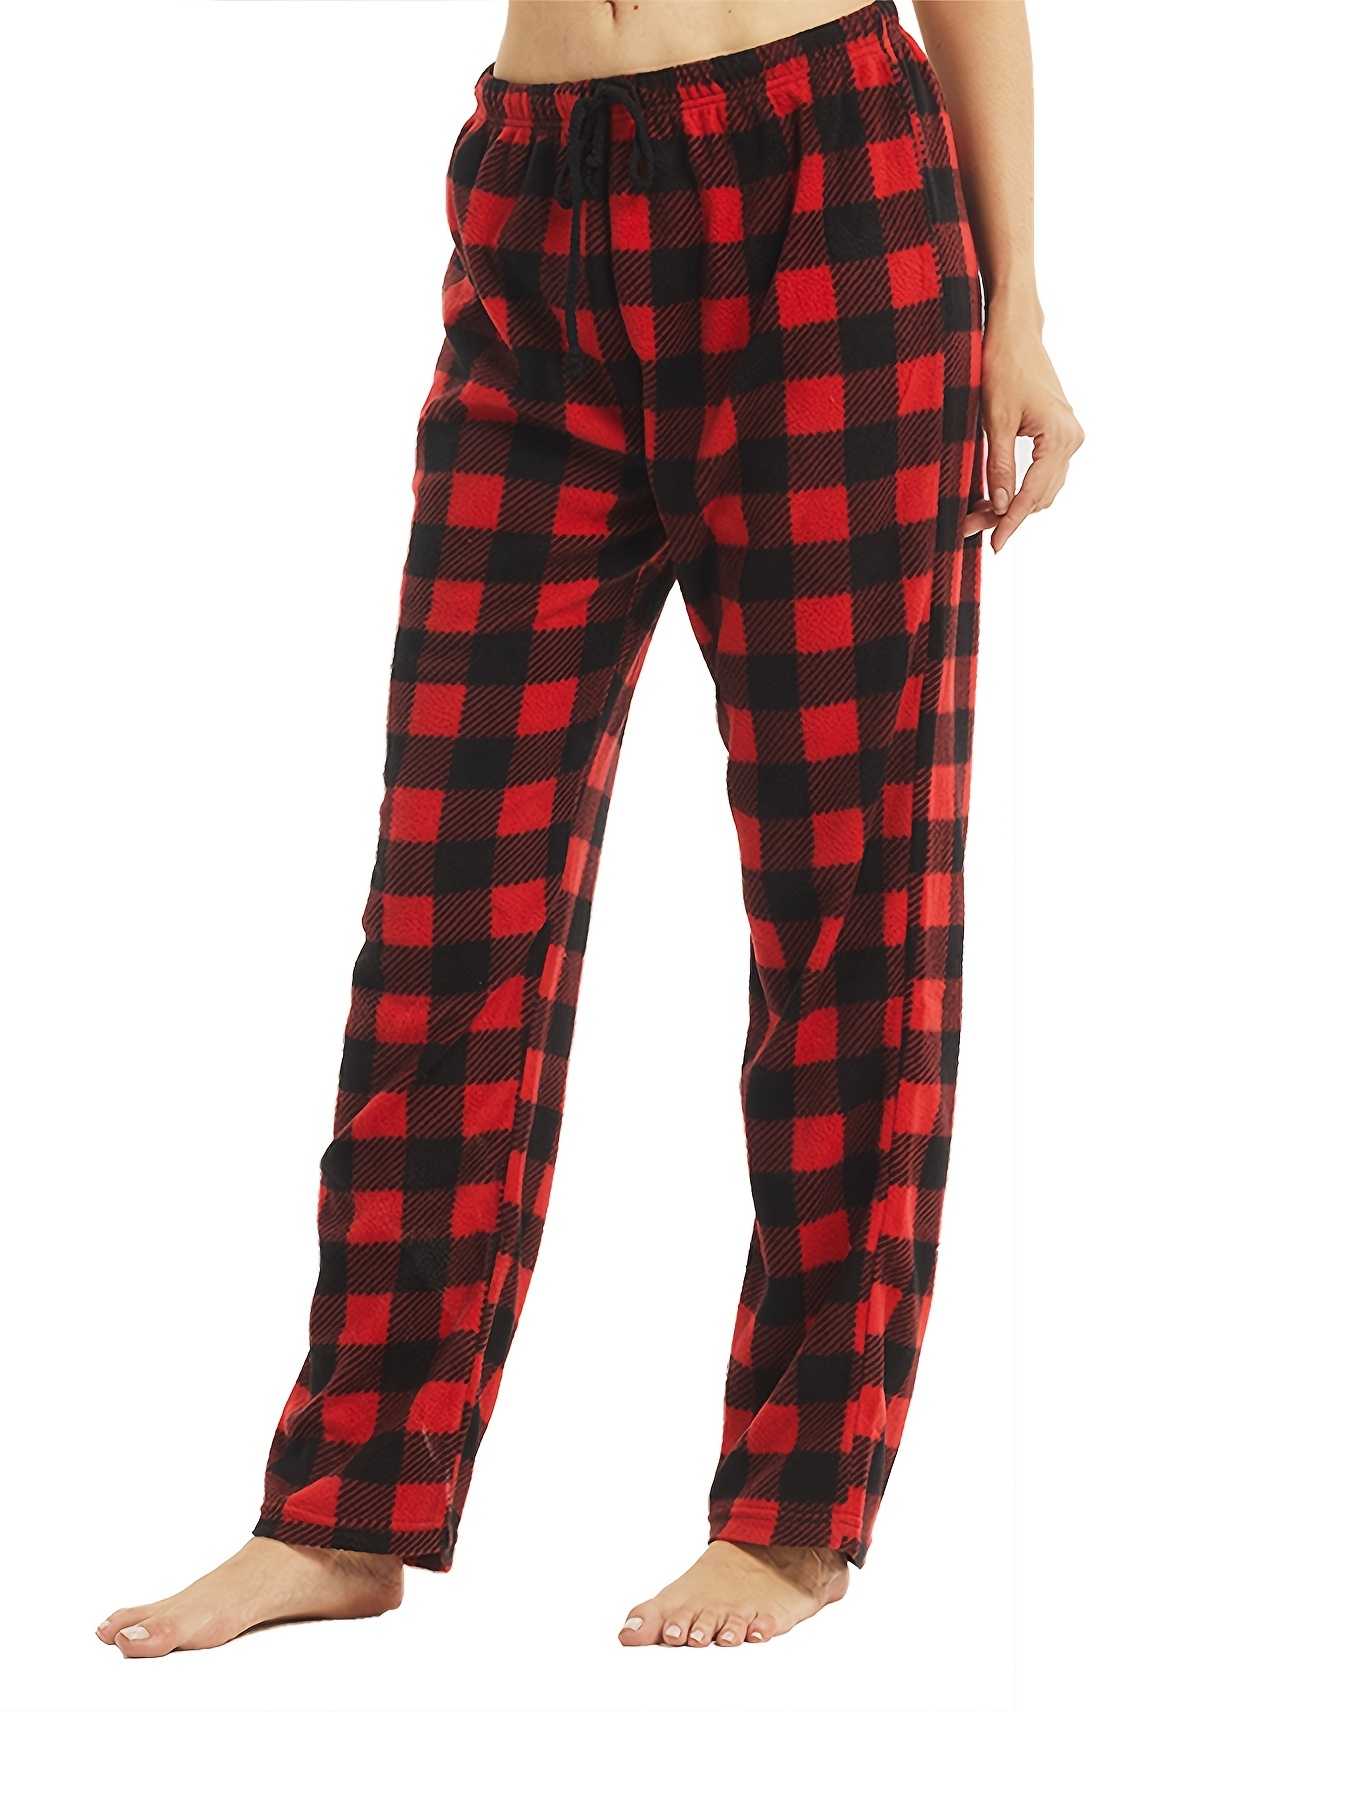  Pantalones de pijama de franela para mujer, pantalones